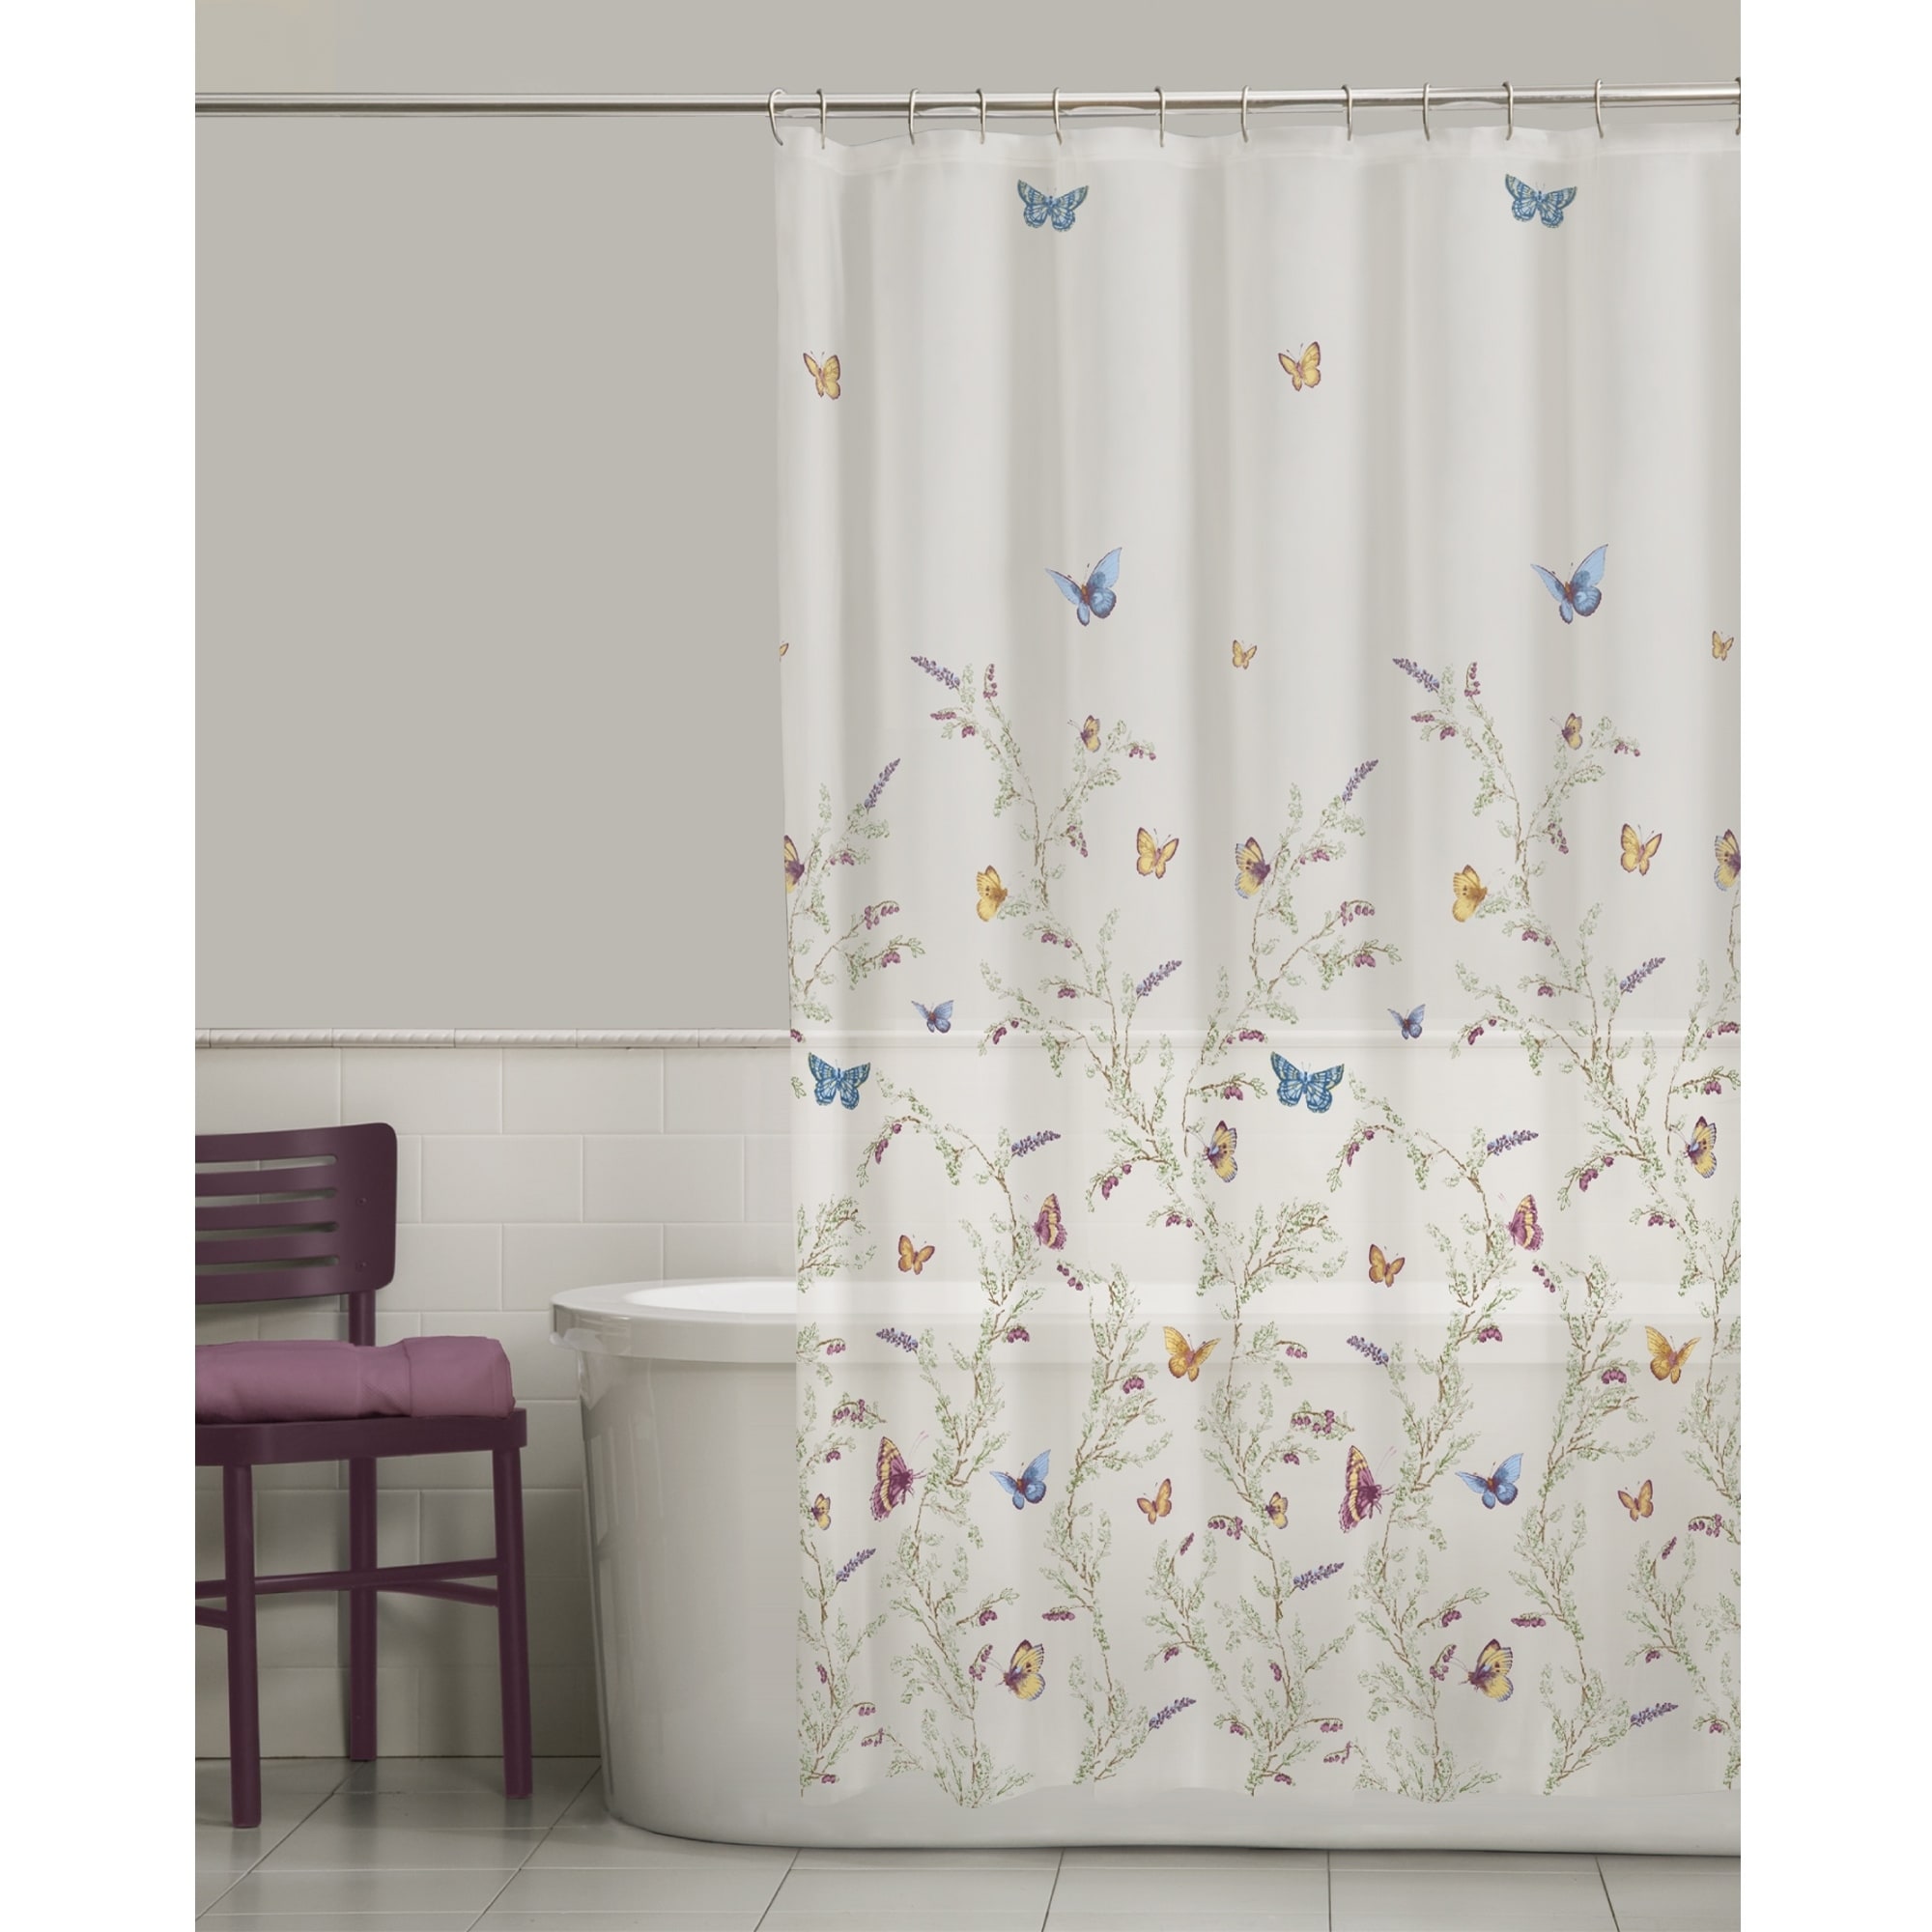 Garden Flight Butterfly PEVA Shower Curtain Off White 70 x 72 | eBay